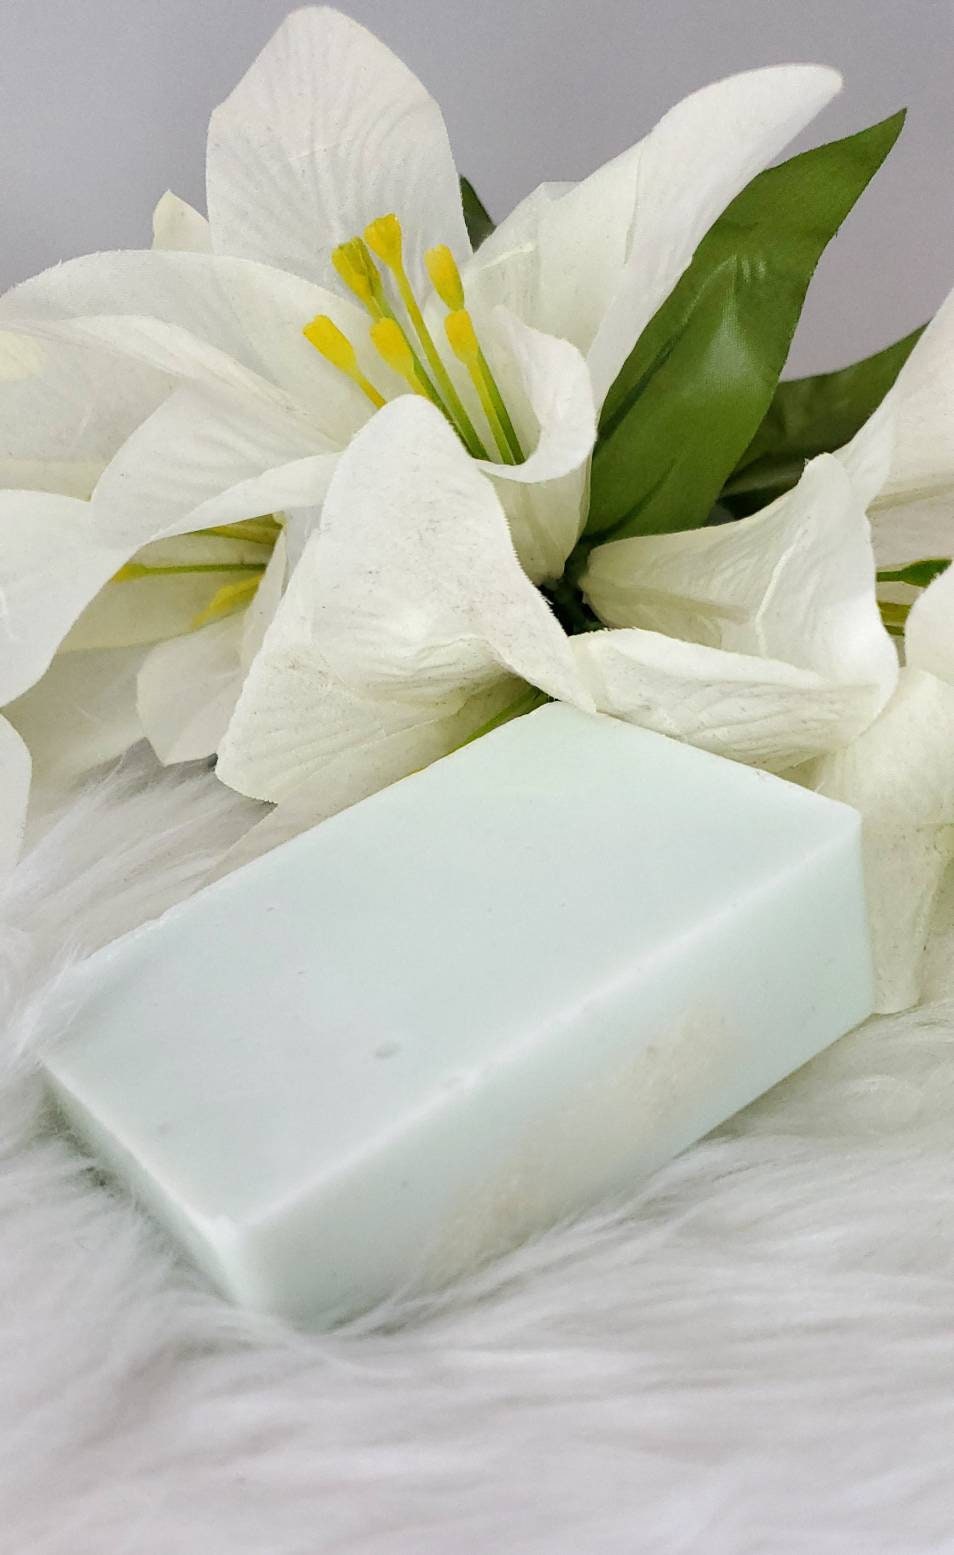 Exfoliating Natural Loofah Soap; Homemade Bar Soap